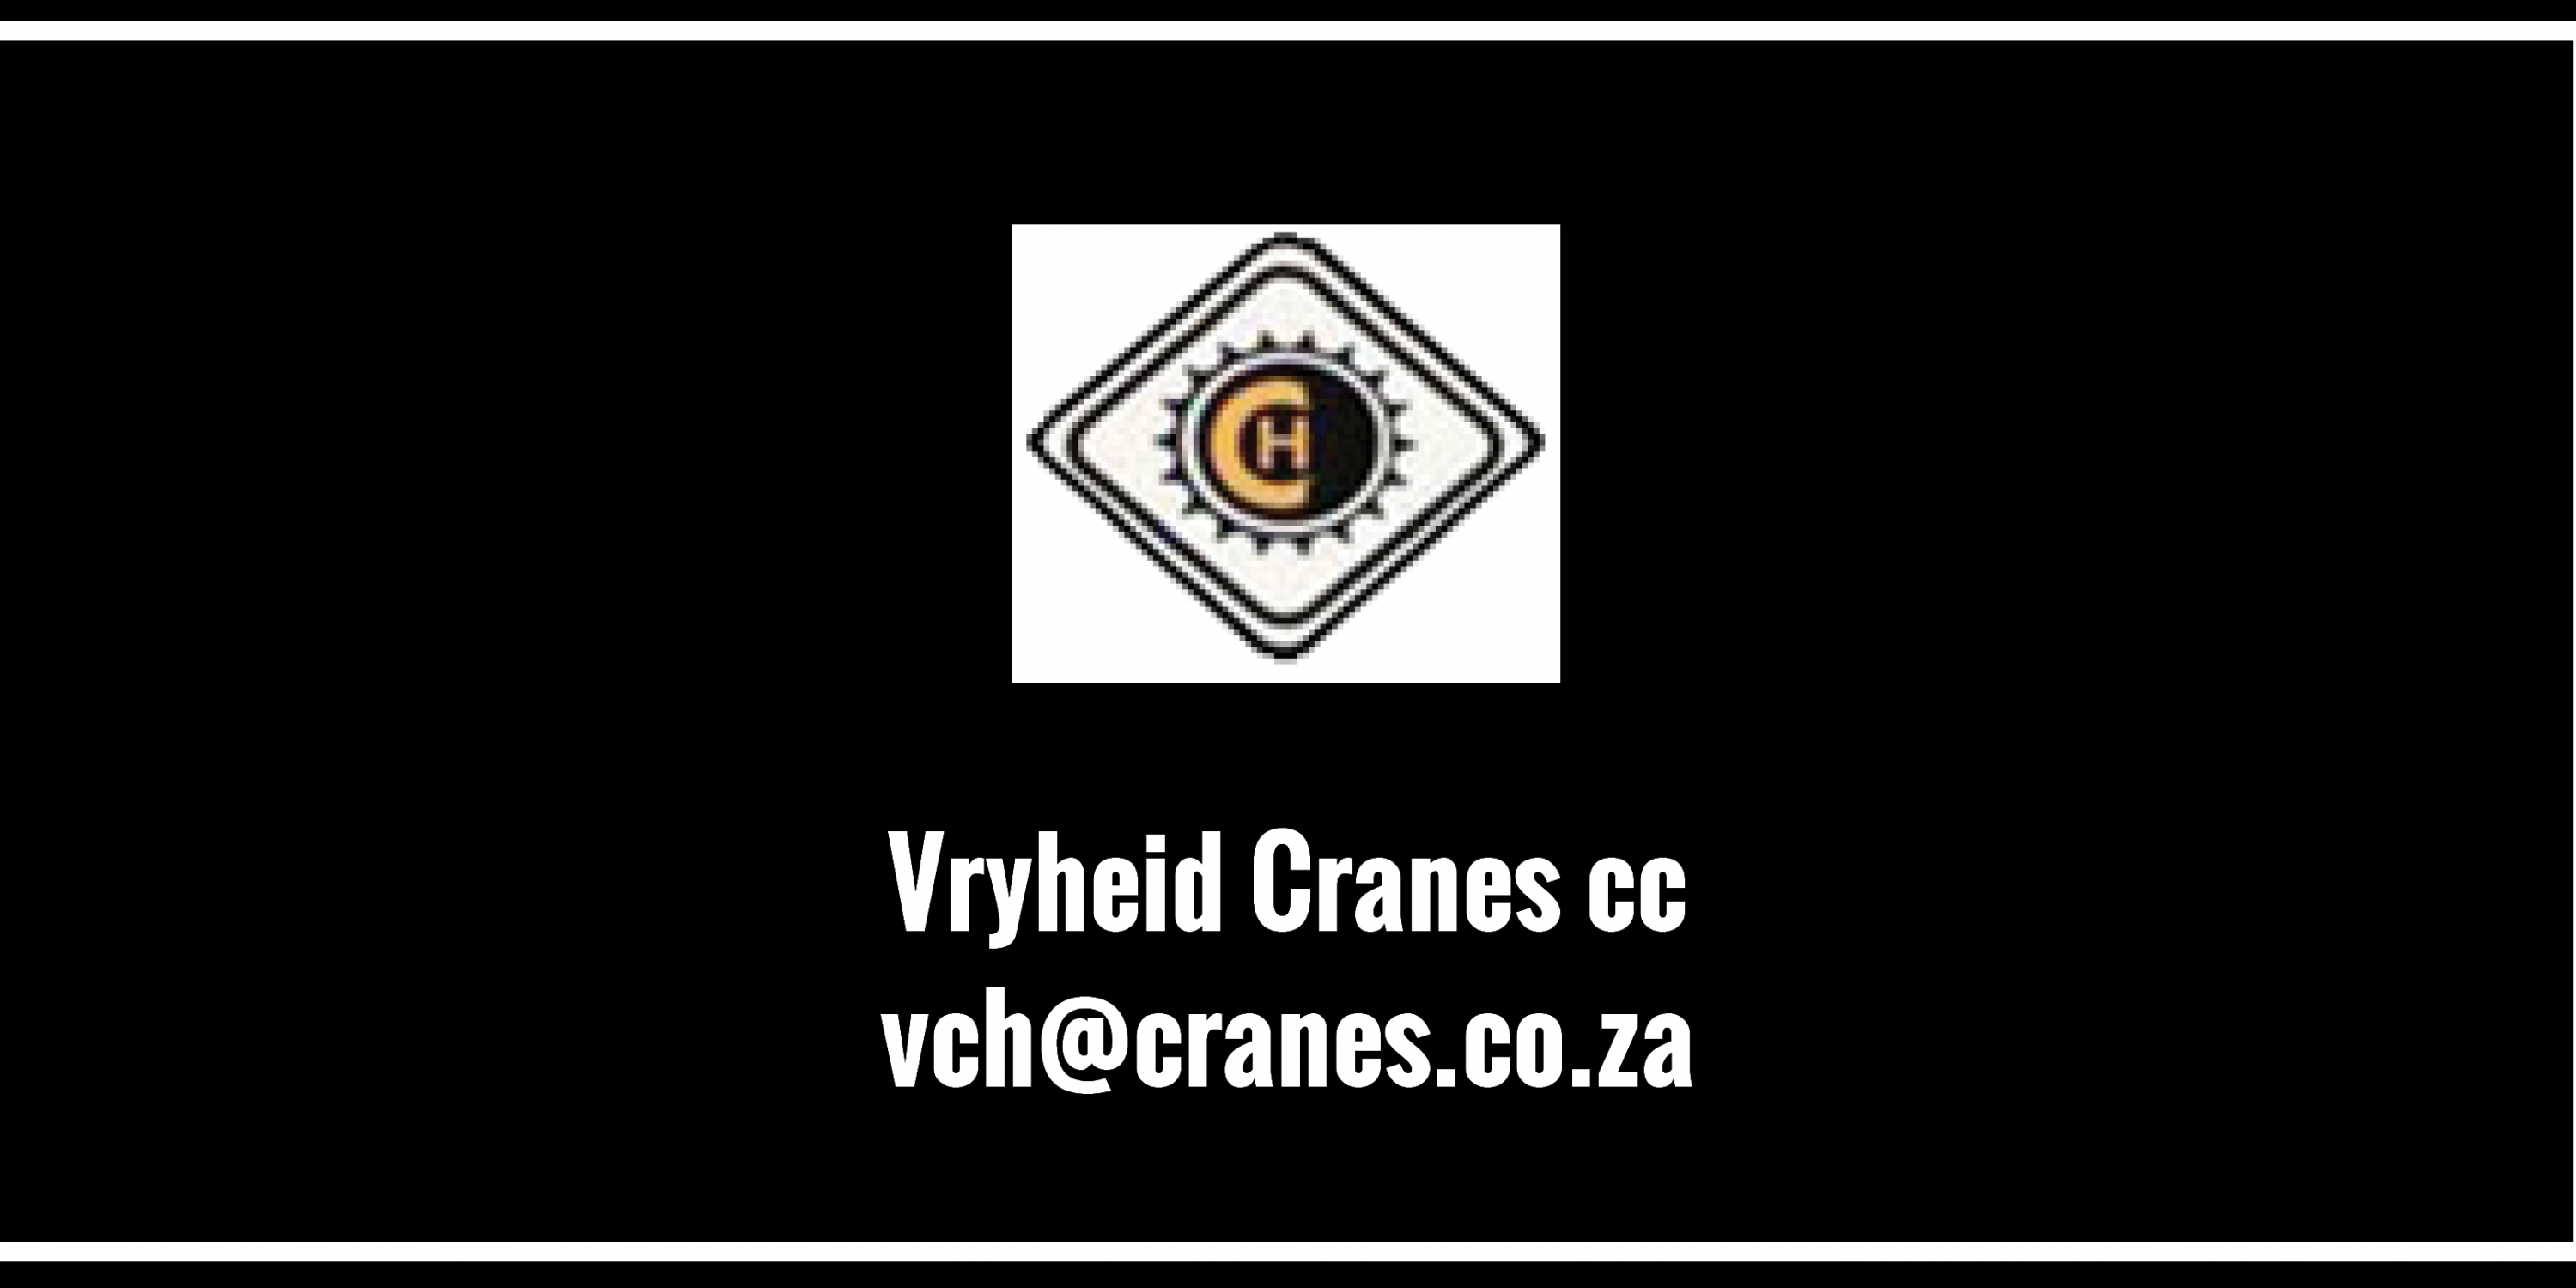 Vryheid Cranes cc